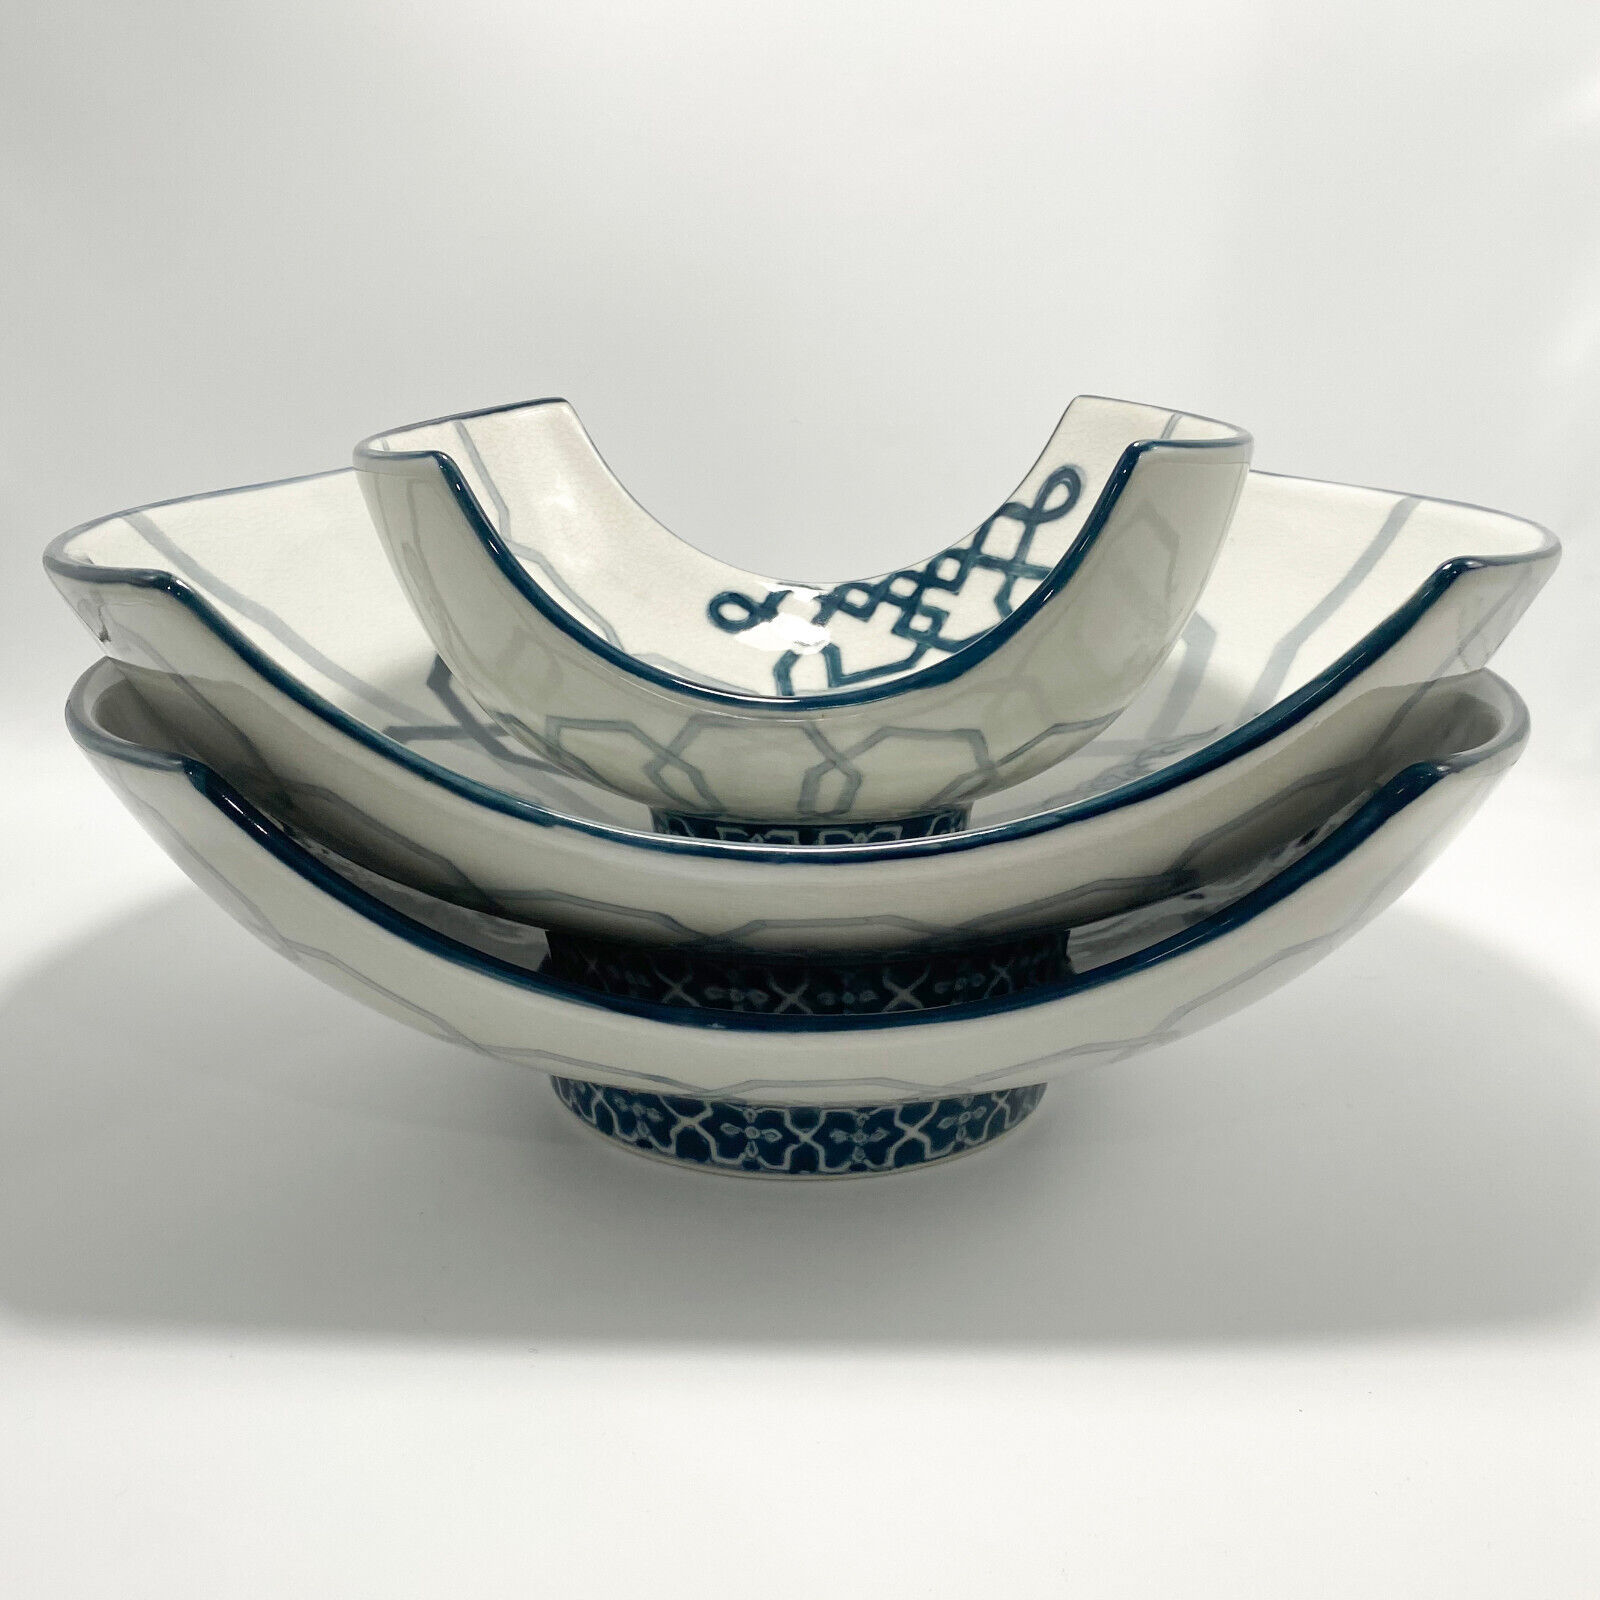 BOMBAY COMPANY Vintage Set of 3 Curved Decor Bowls - Teal Dragon & Lattice Motif